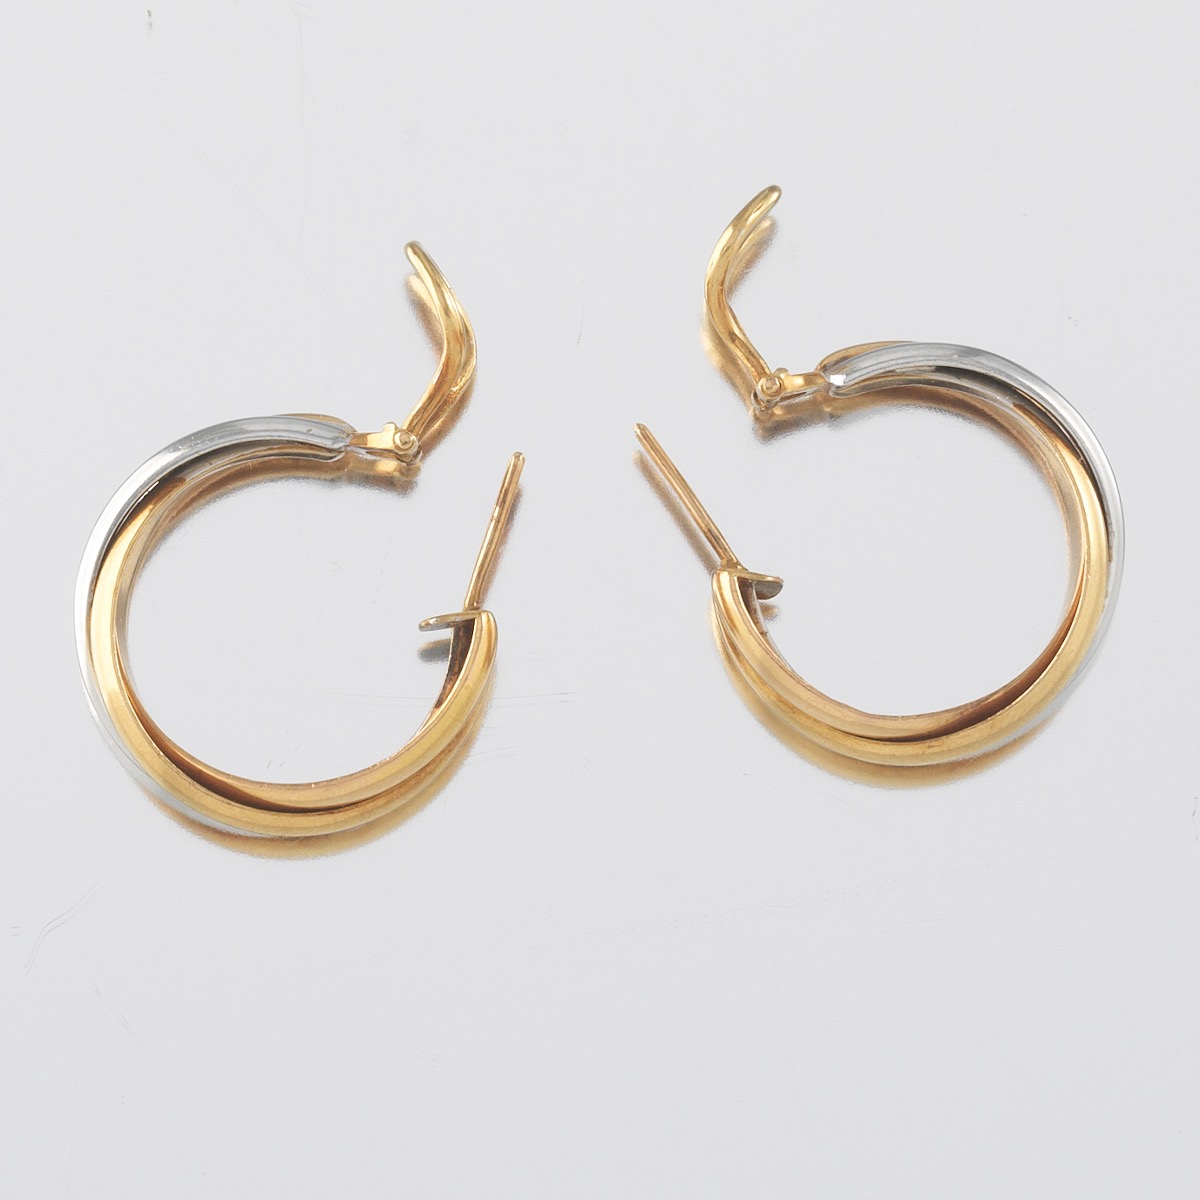 Pair of Cartier-Style Trinity Gold Hoop Earrings - Image 6 of 7